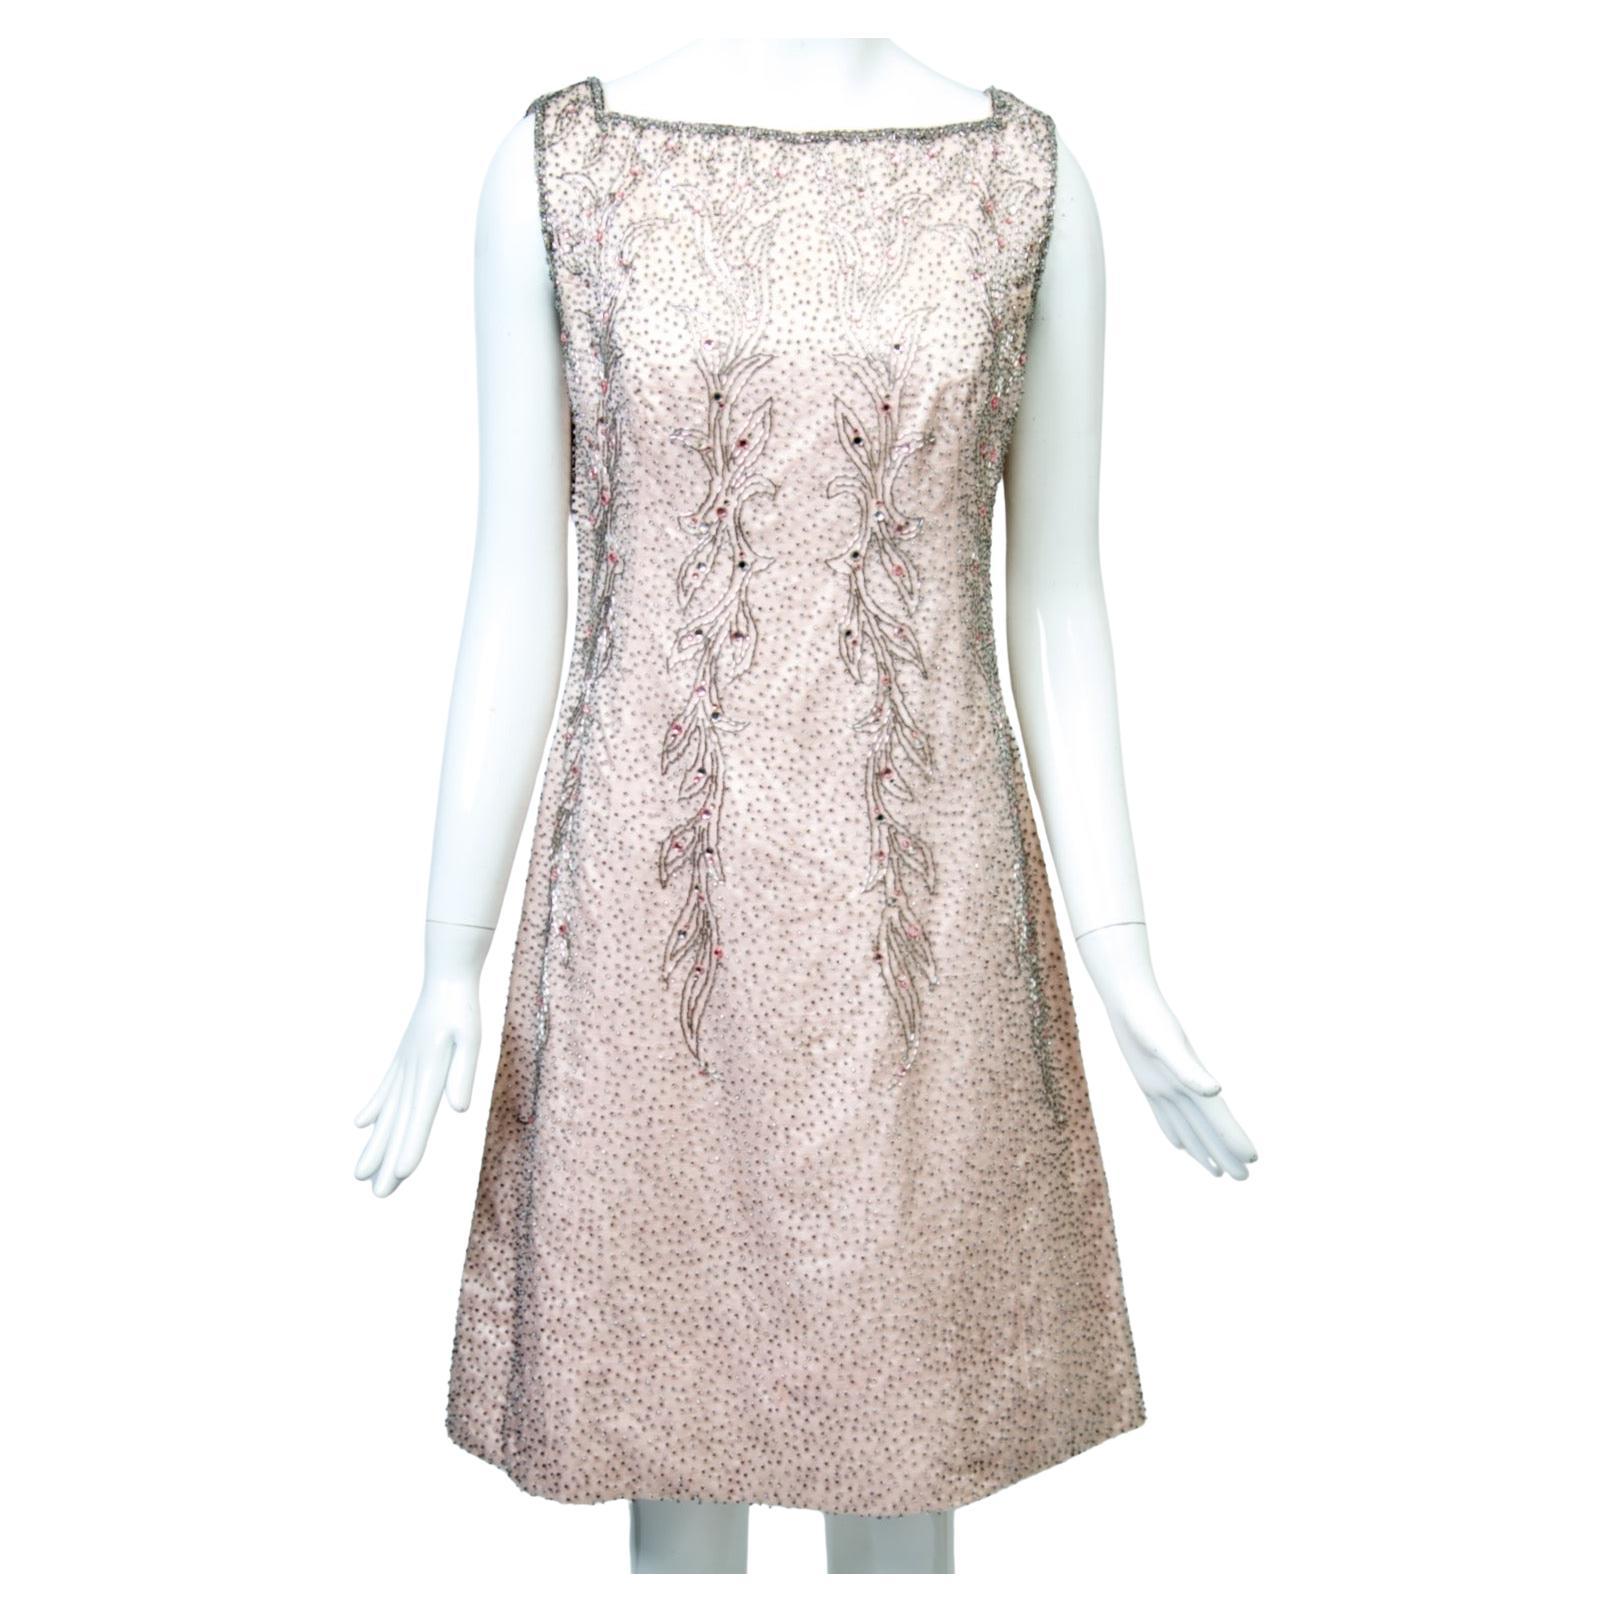 Malcom Starr 1960s Pink Beaded Dress For Sale